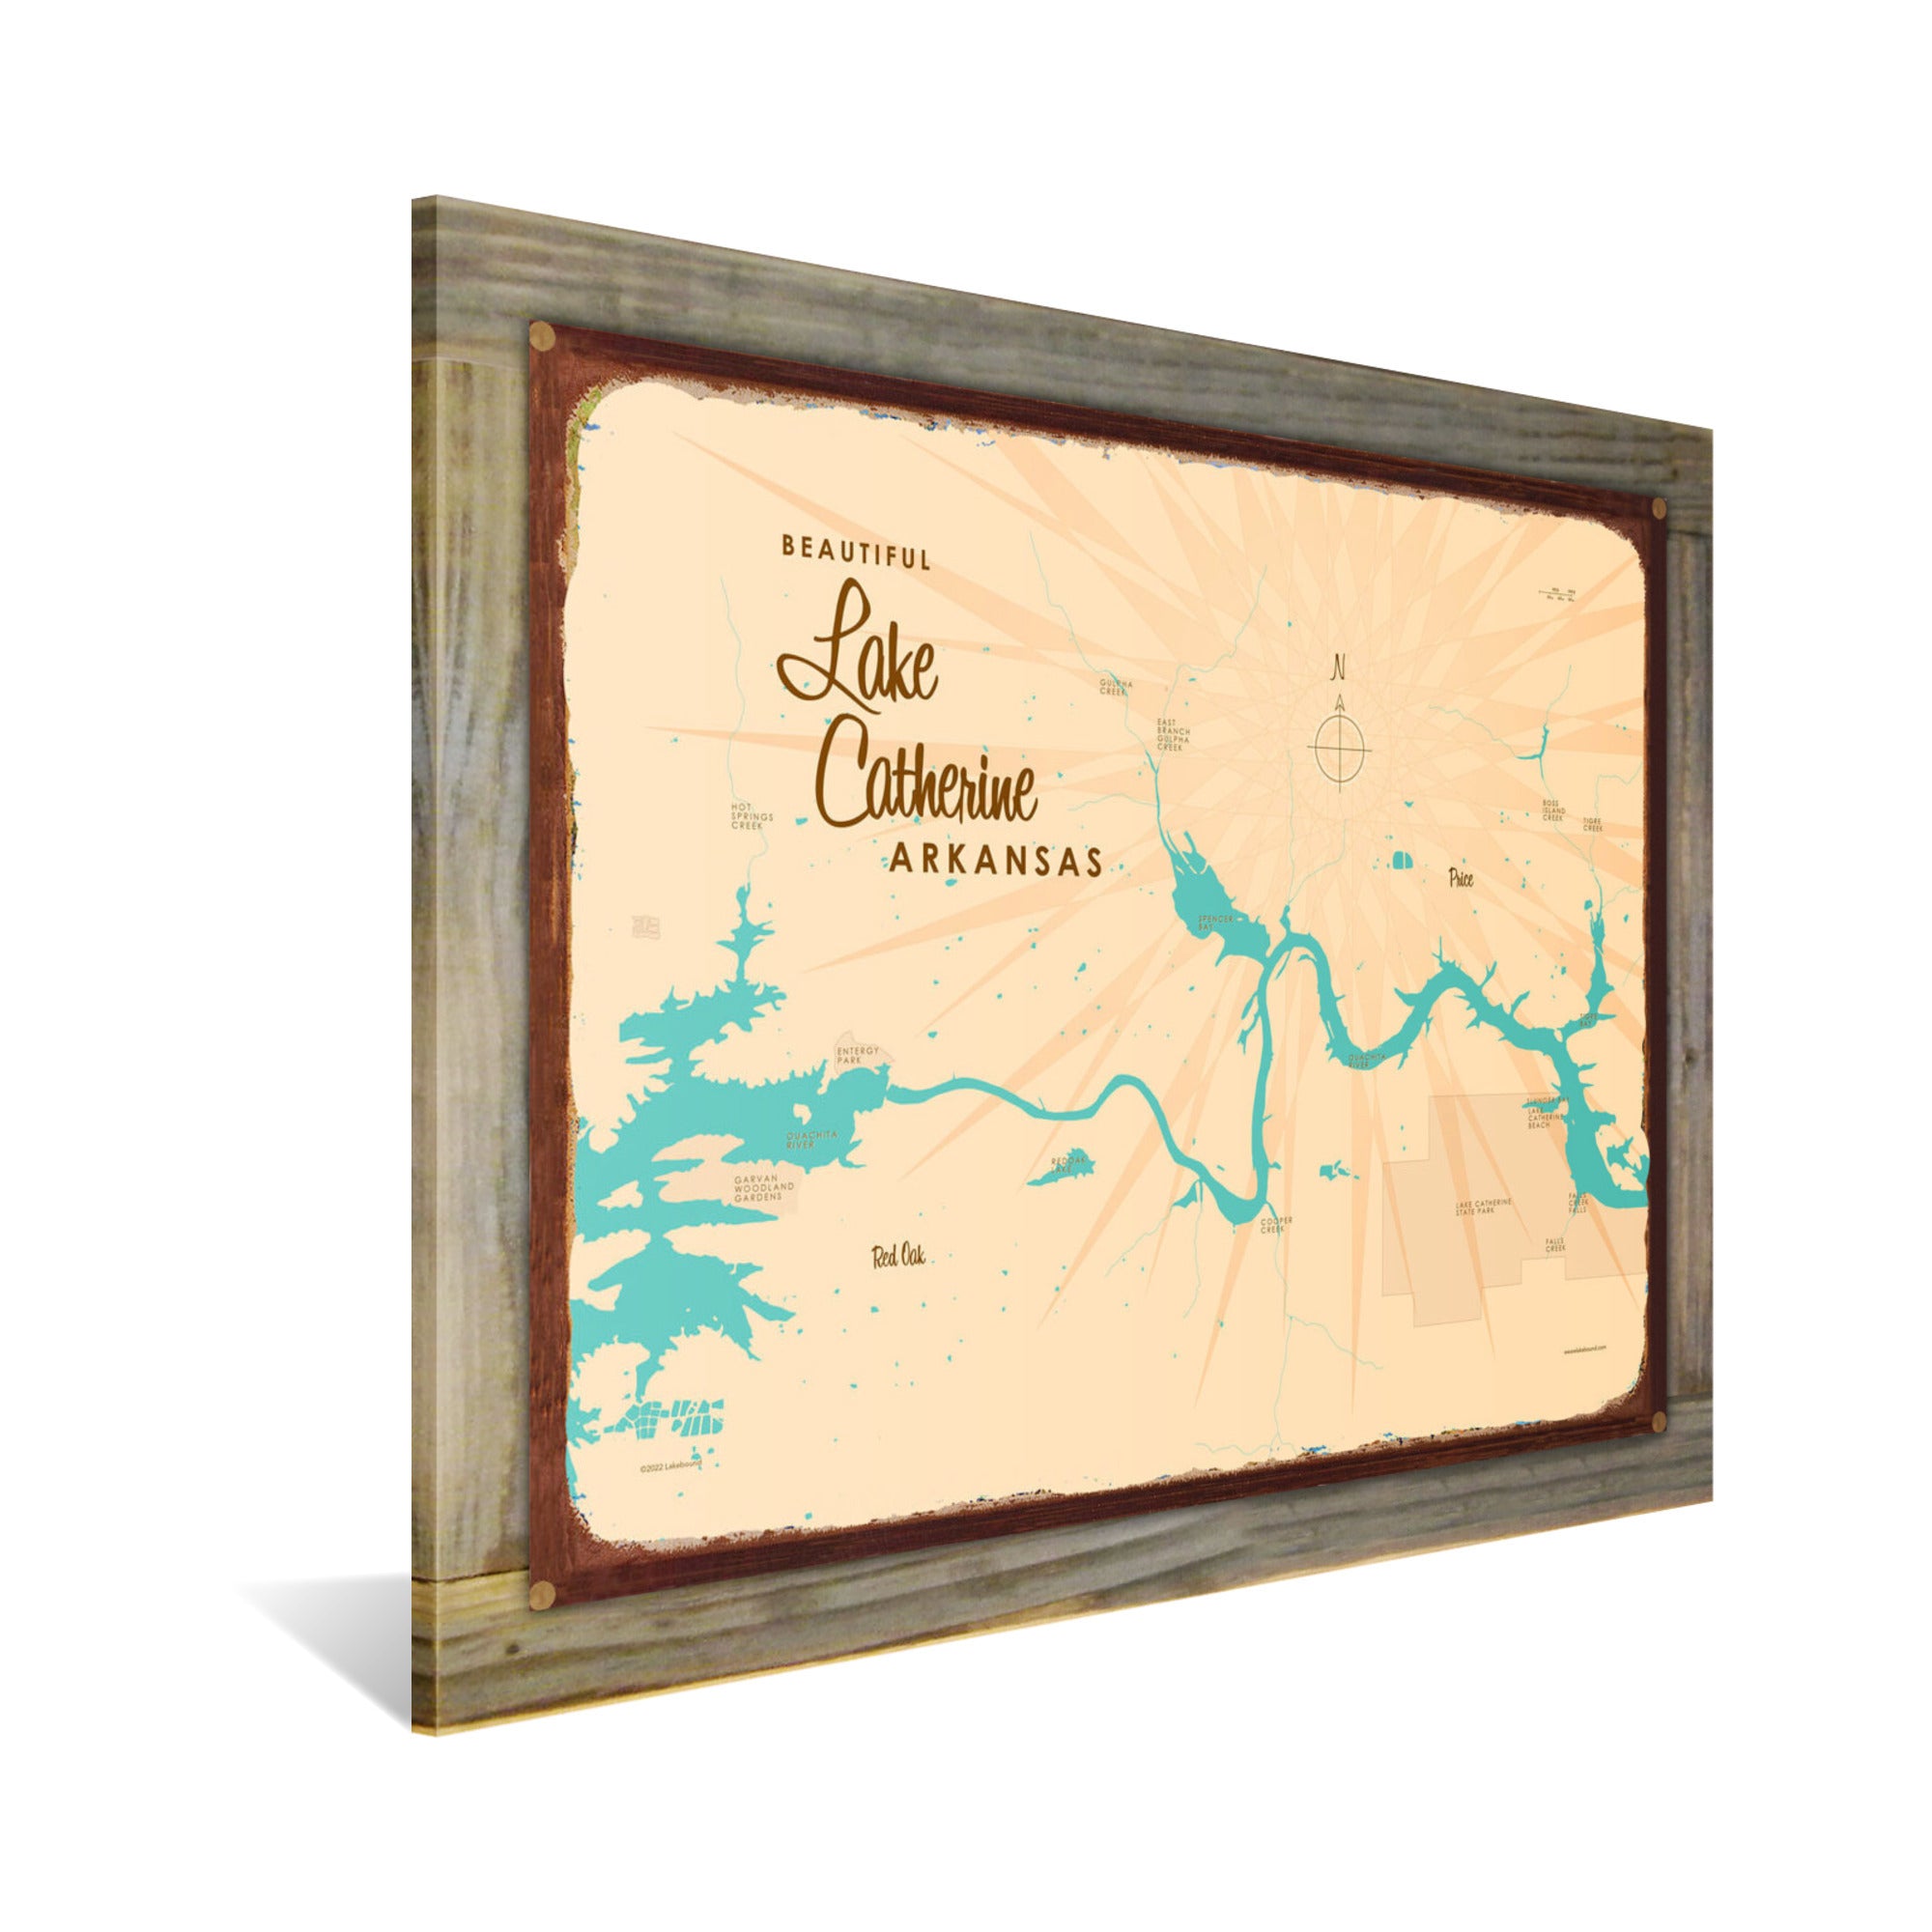 Lake Catherine Arkansas, Wood-Mounted Rustic Metal Sign Map Art